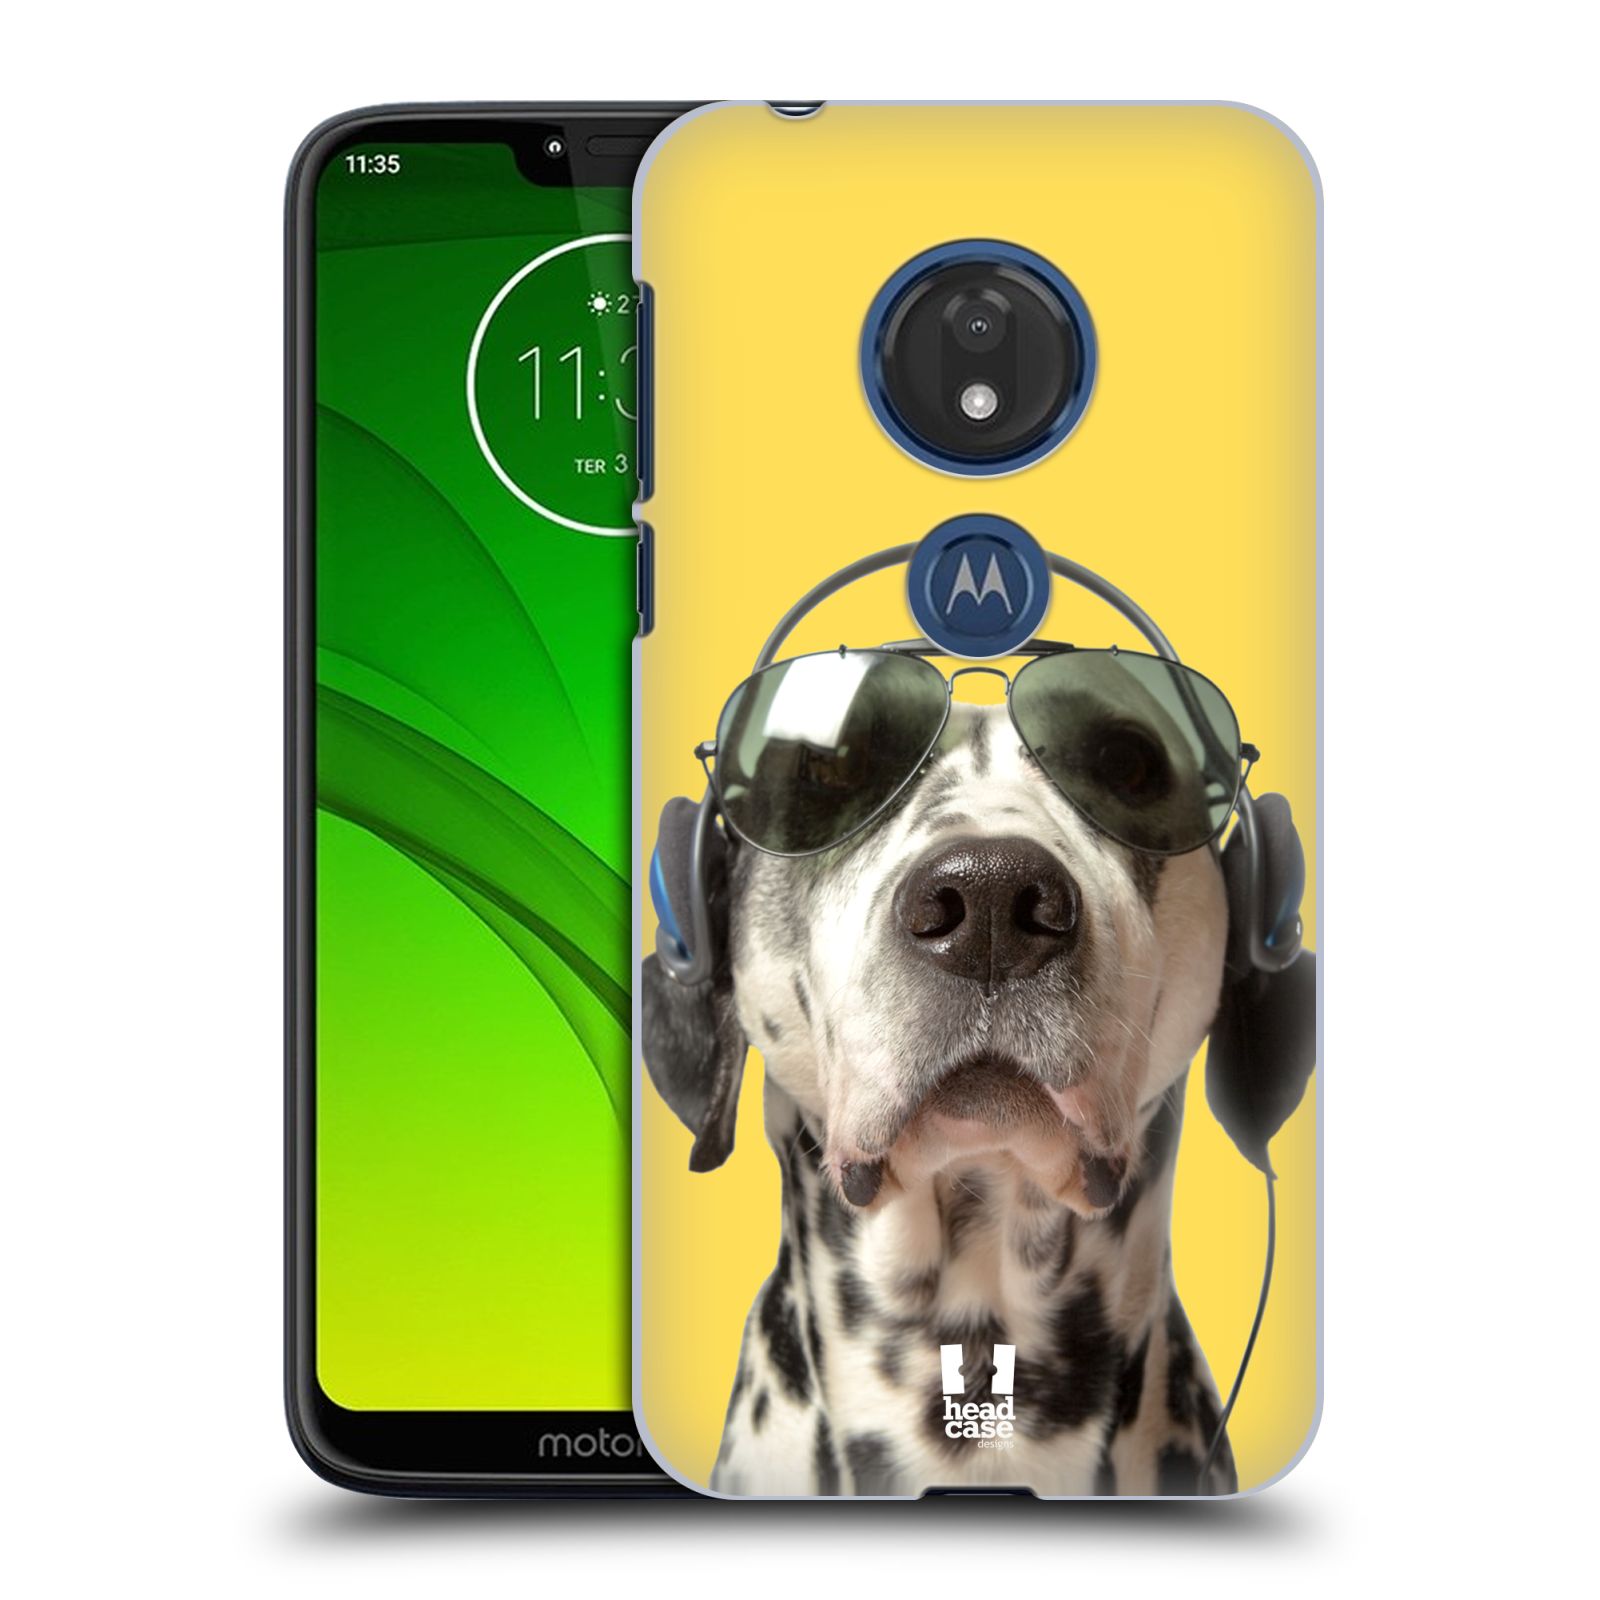 Pouzdro na mobil Motorola Moto G7 Play vzor Legrační zvířátka dalmatin se sluchátky žlutá